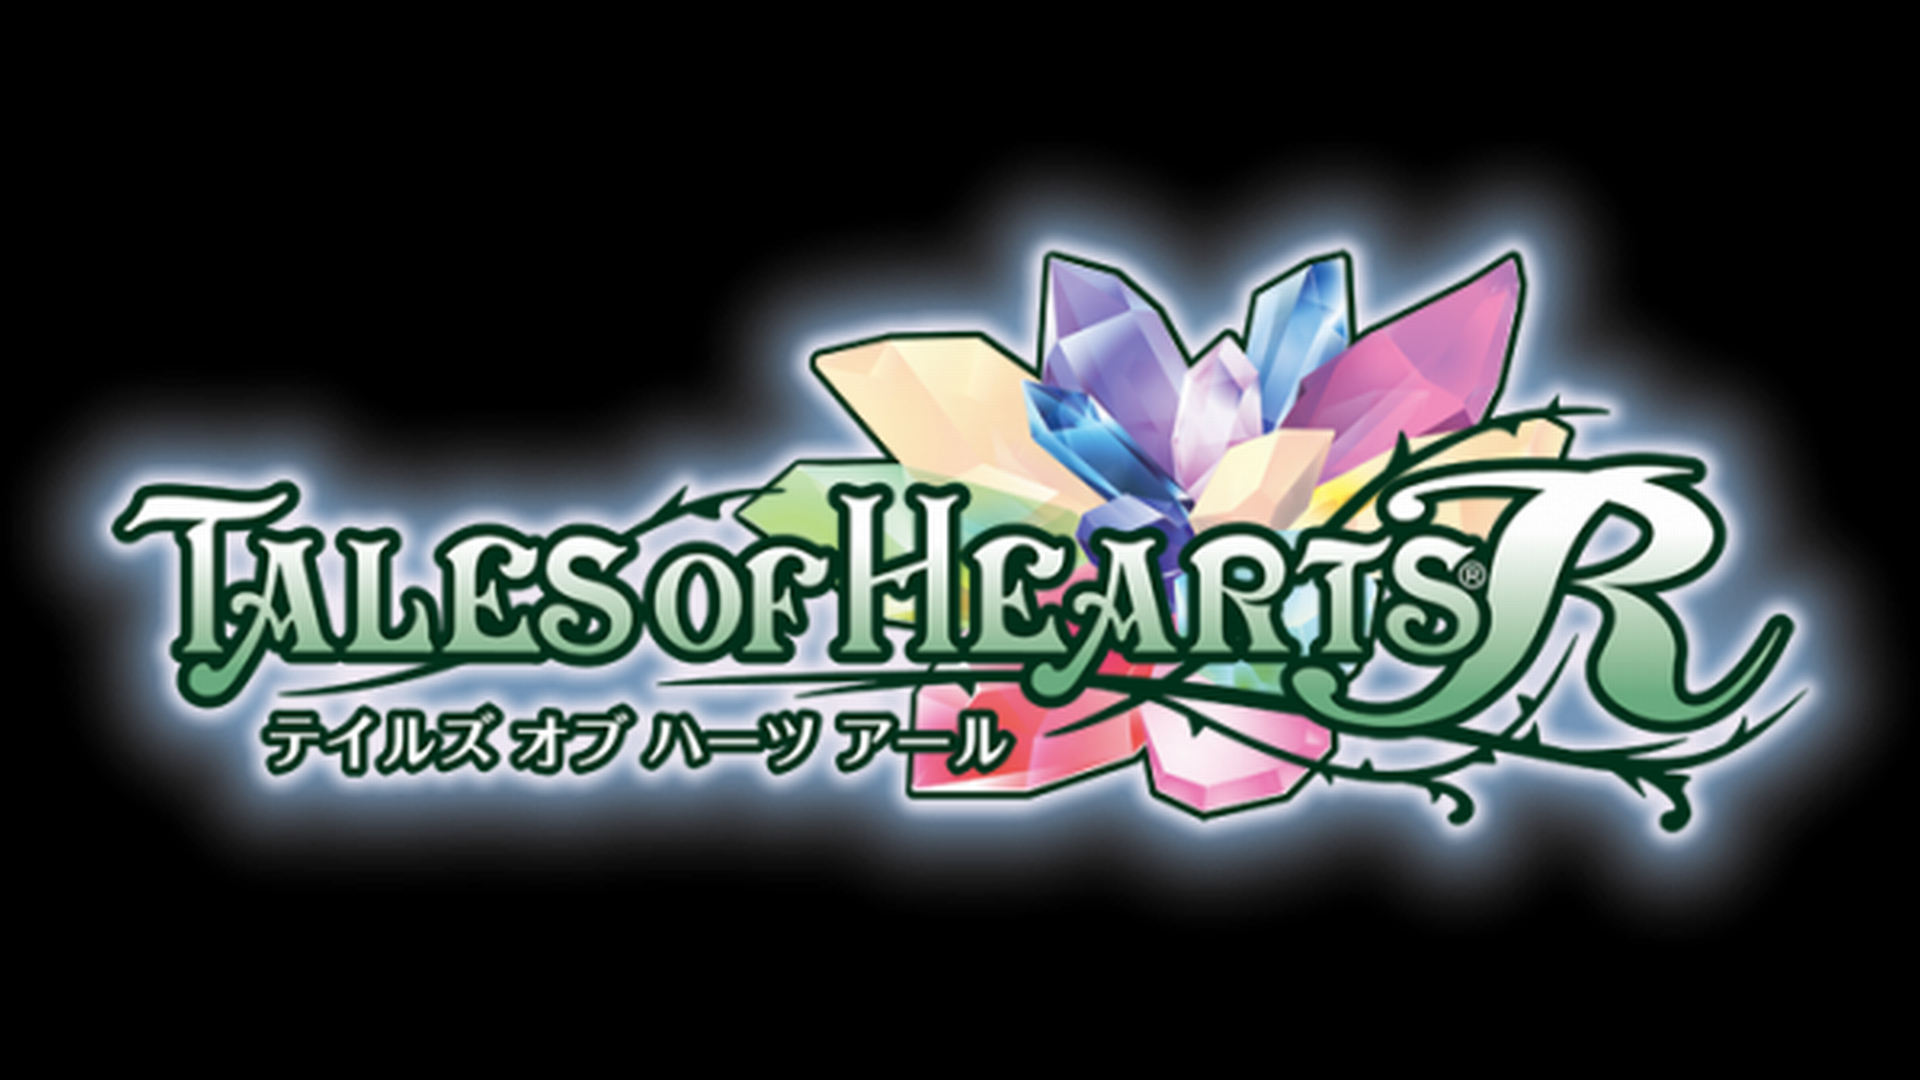 Tales of Hearts R Logo